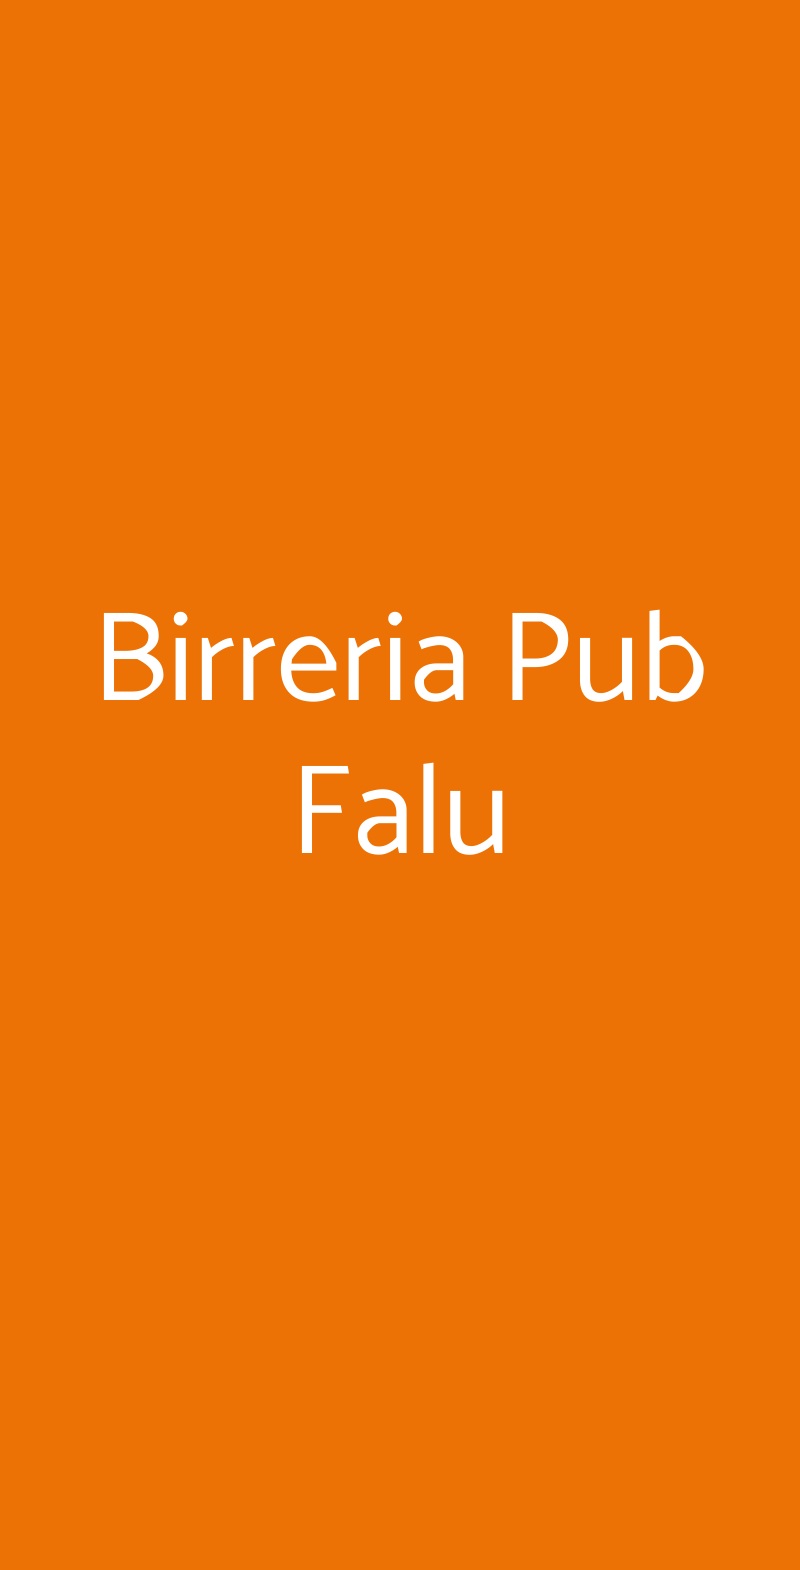 Birreria Pub Falu Guidonia Montecelio menù 1 pagina